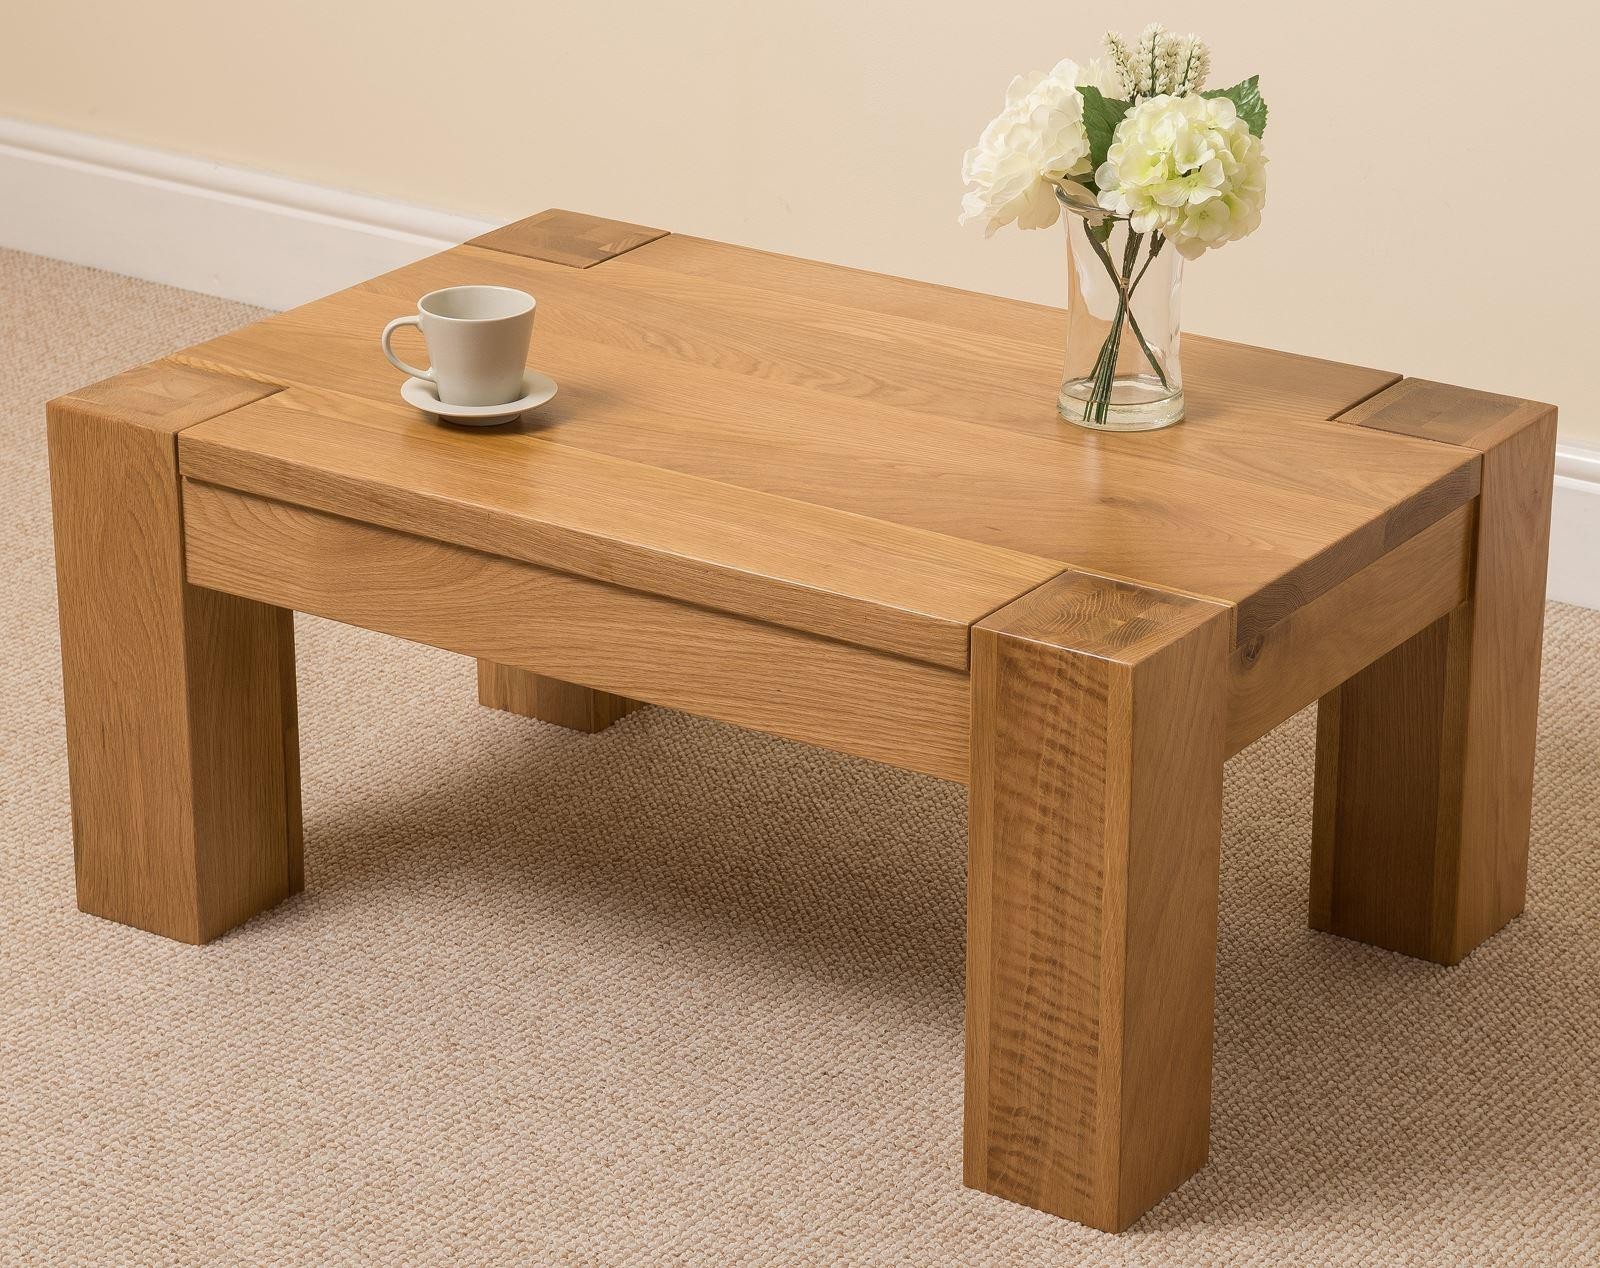 Diy solid wood coffee table